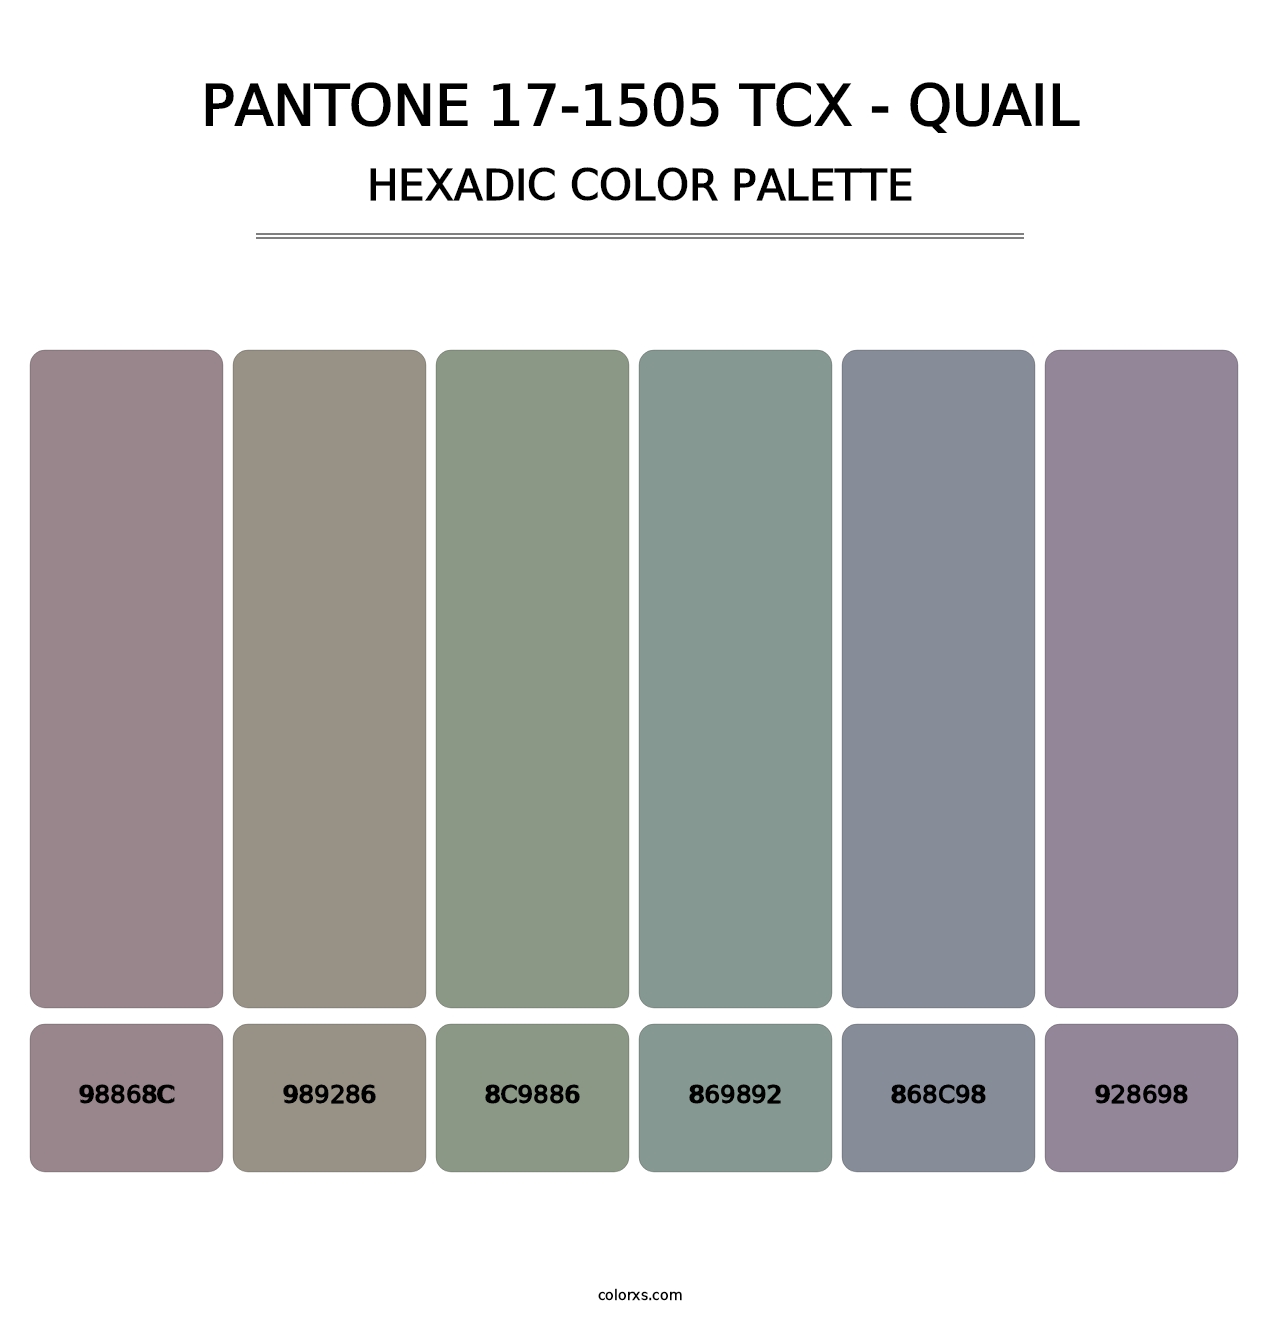 PANTONE 17-1505 TCX - Quail - Hexadic Color Palette